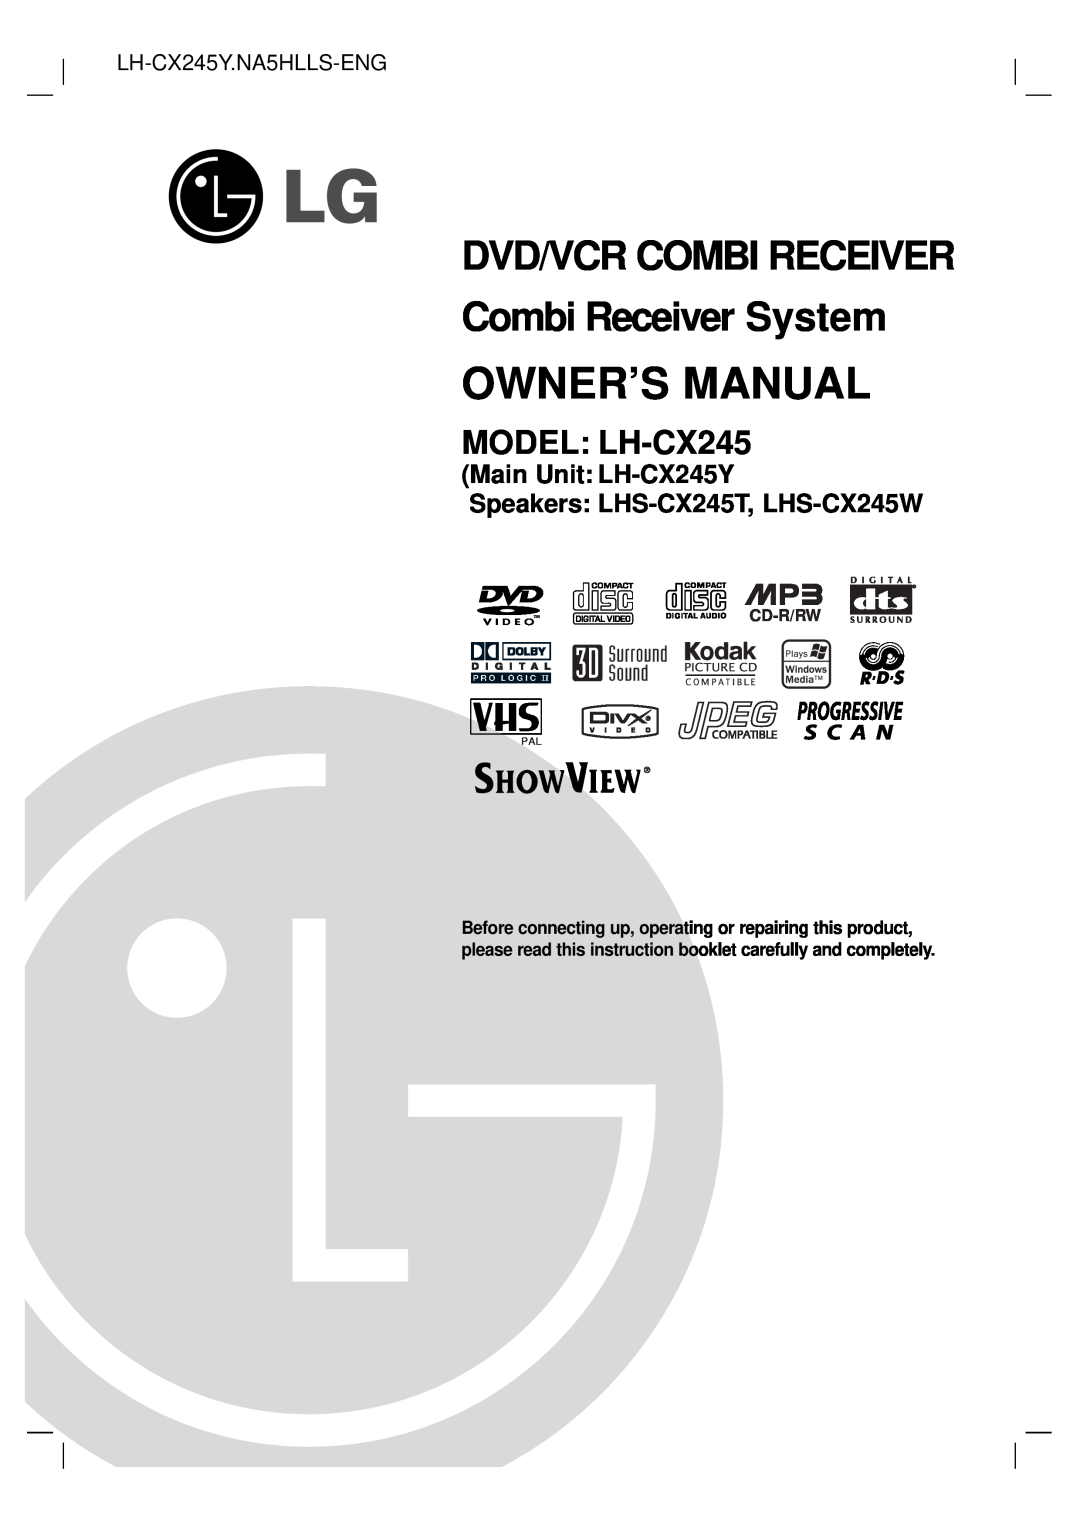 LG Electronics owner manual Owner’S Manual, Main Unit LH-CX245Y Speakers LHS-CX245T, LHS-CX245W, MODEL LH-CX245 